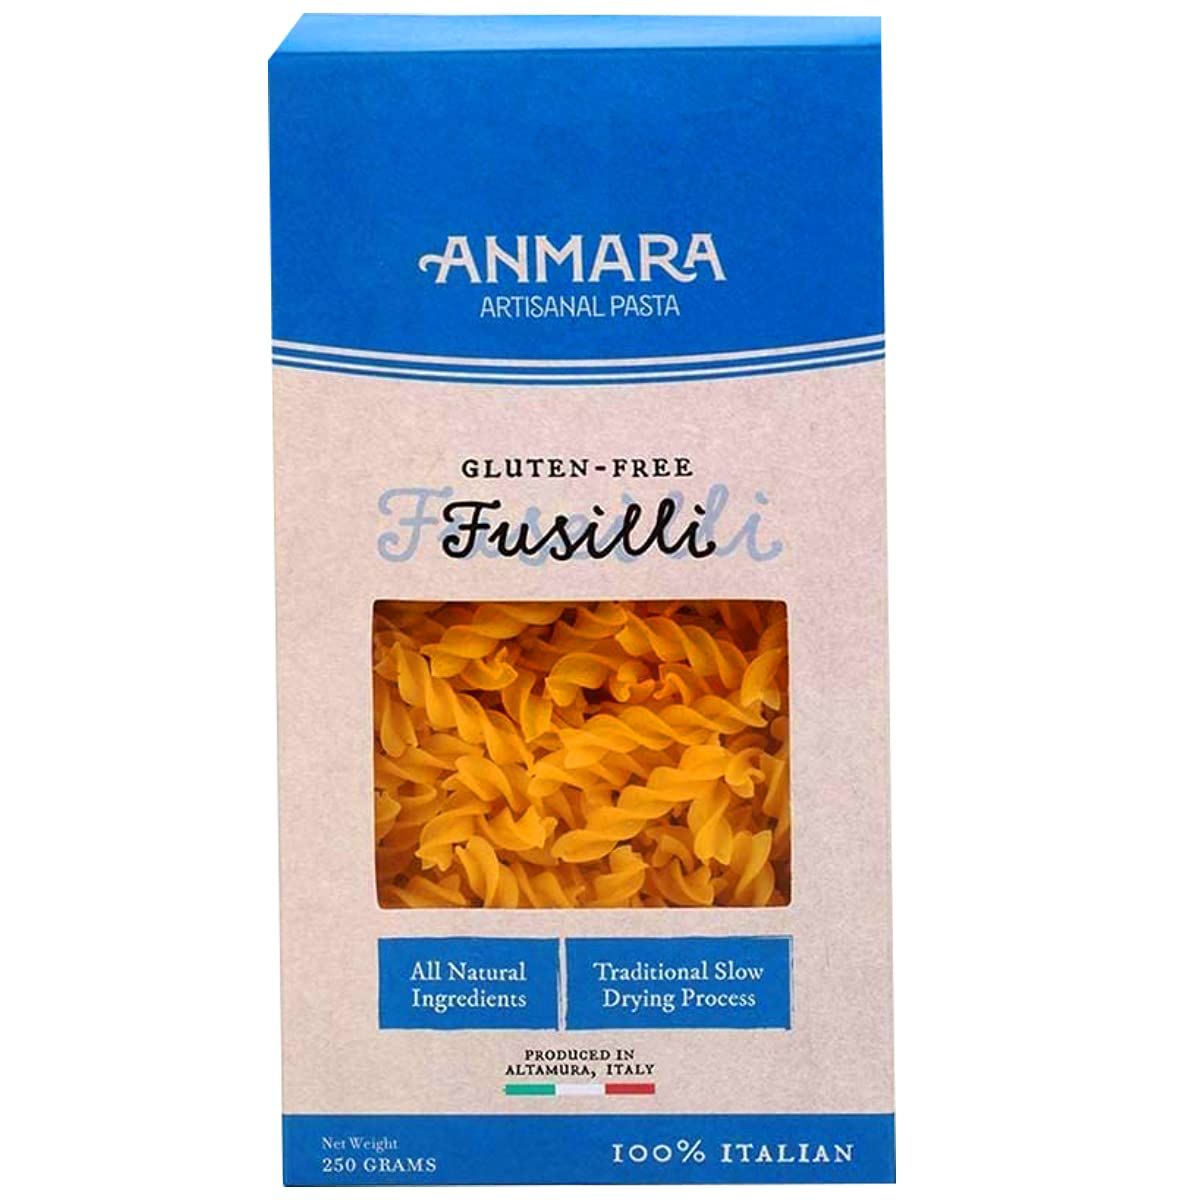 ANMARA Artisanal Pasta Gluten Free Fusilli Image